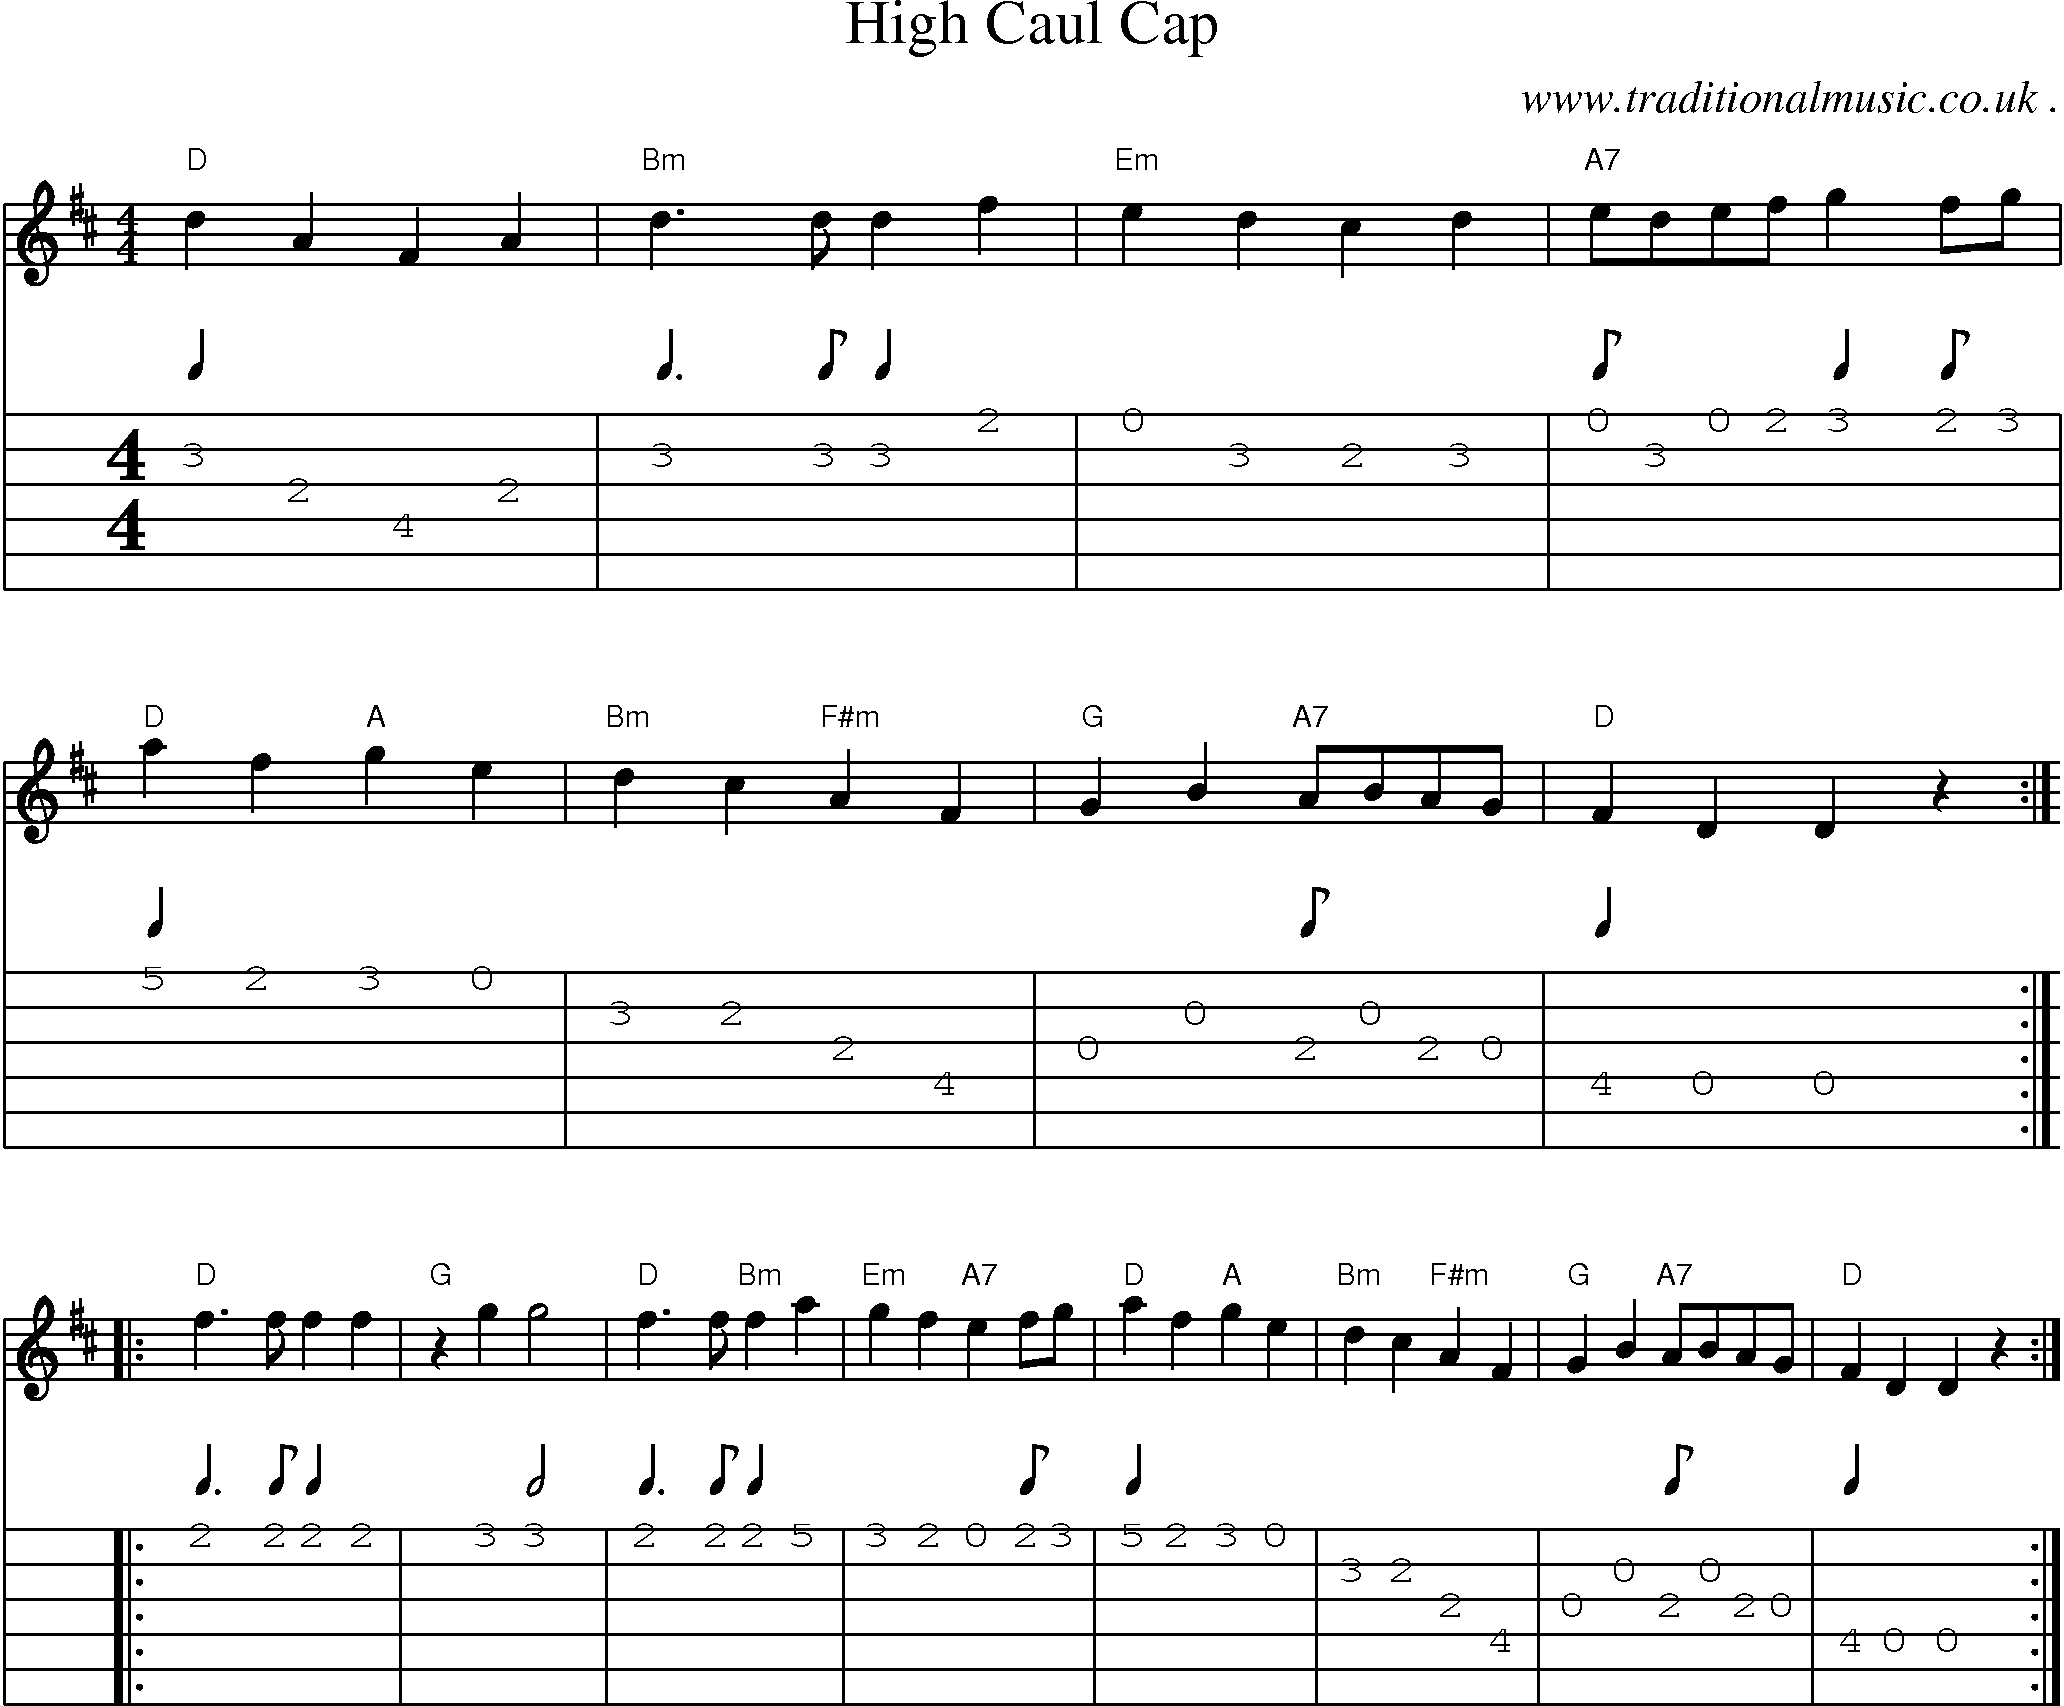 Sheet-Music and Guitar Tabs for High Caul Cap